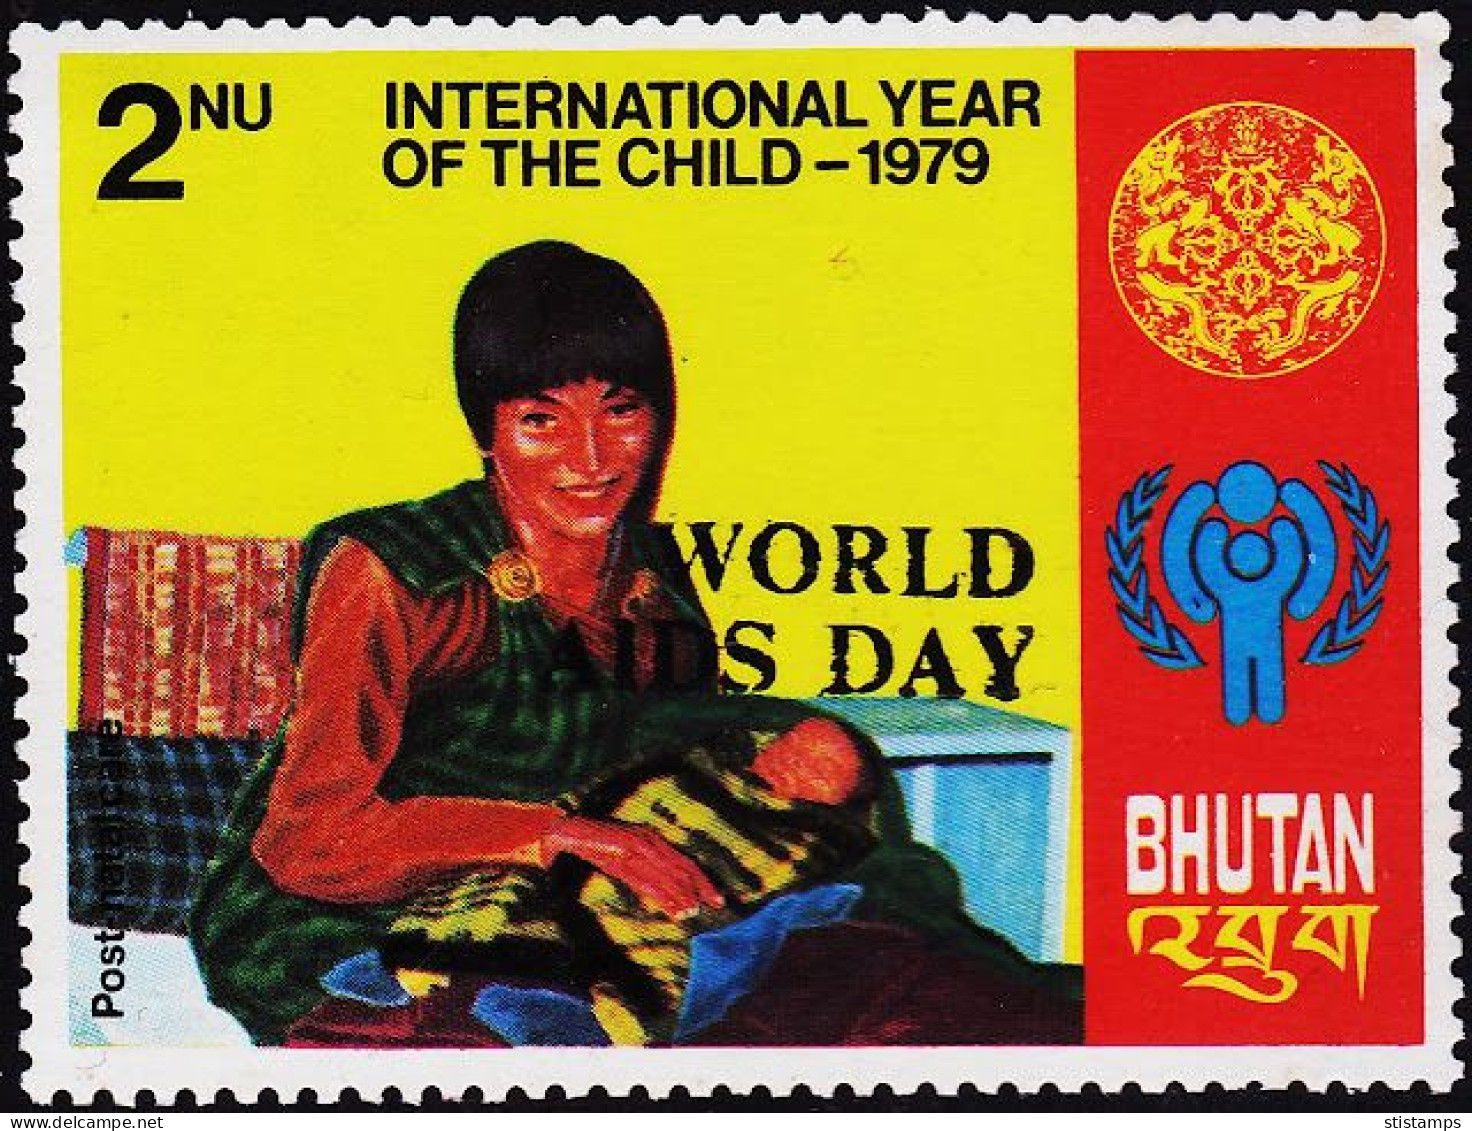 BHUTAN 1988 - HEALTH THEME - OVERPRINTED "WORLD AIDS DAY" MINT NH STAMPS #1008 - Bhutan